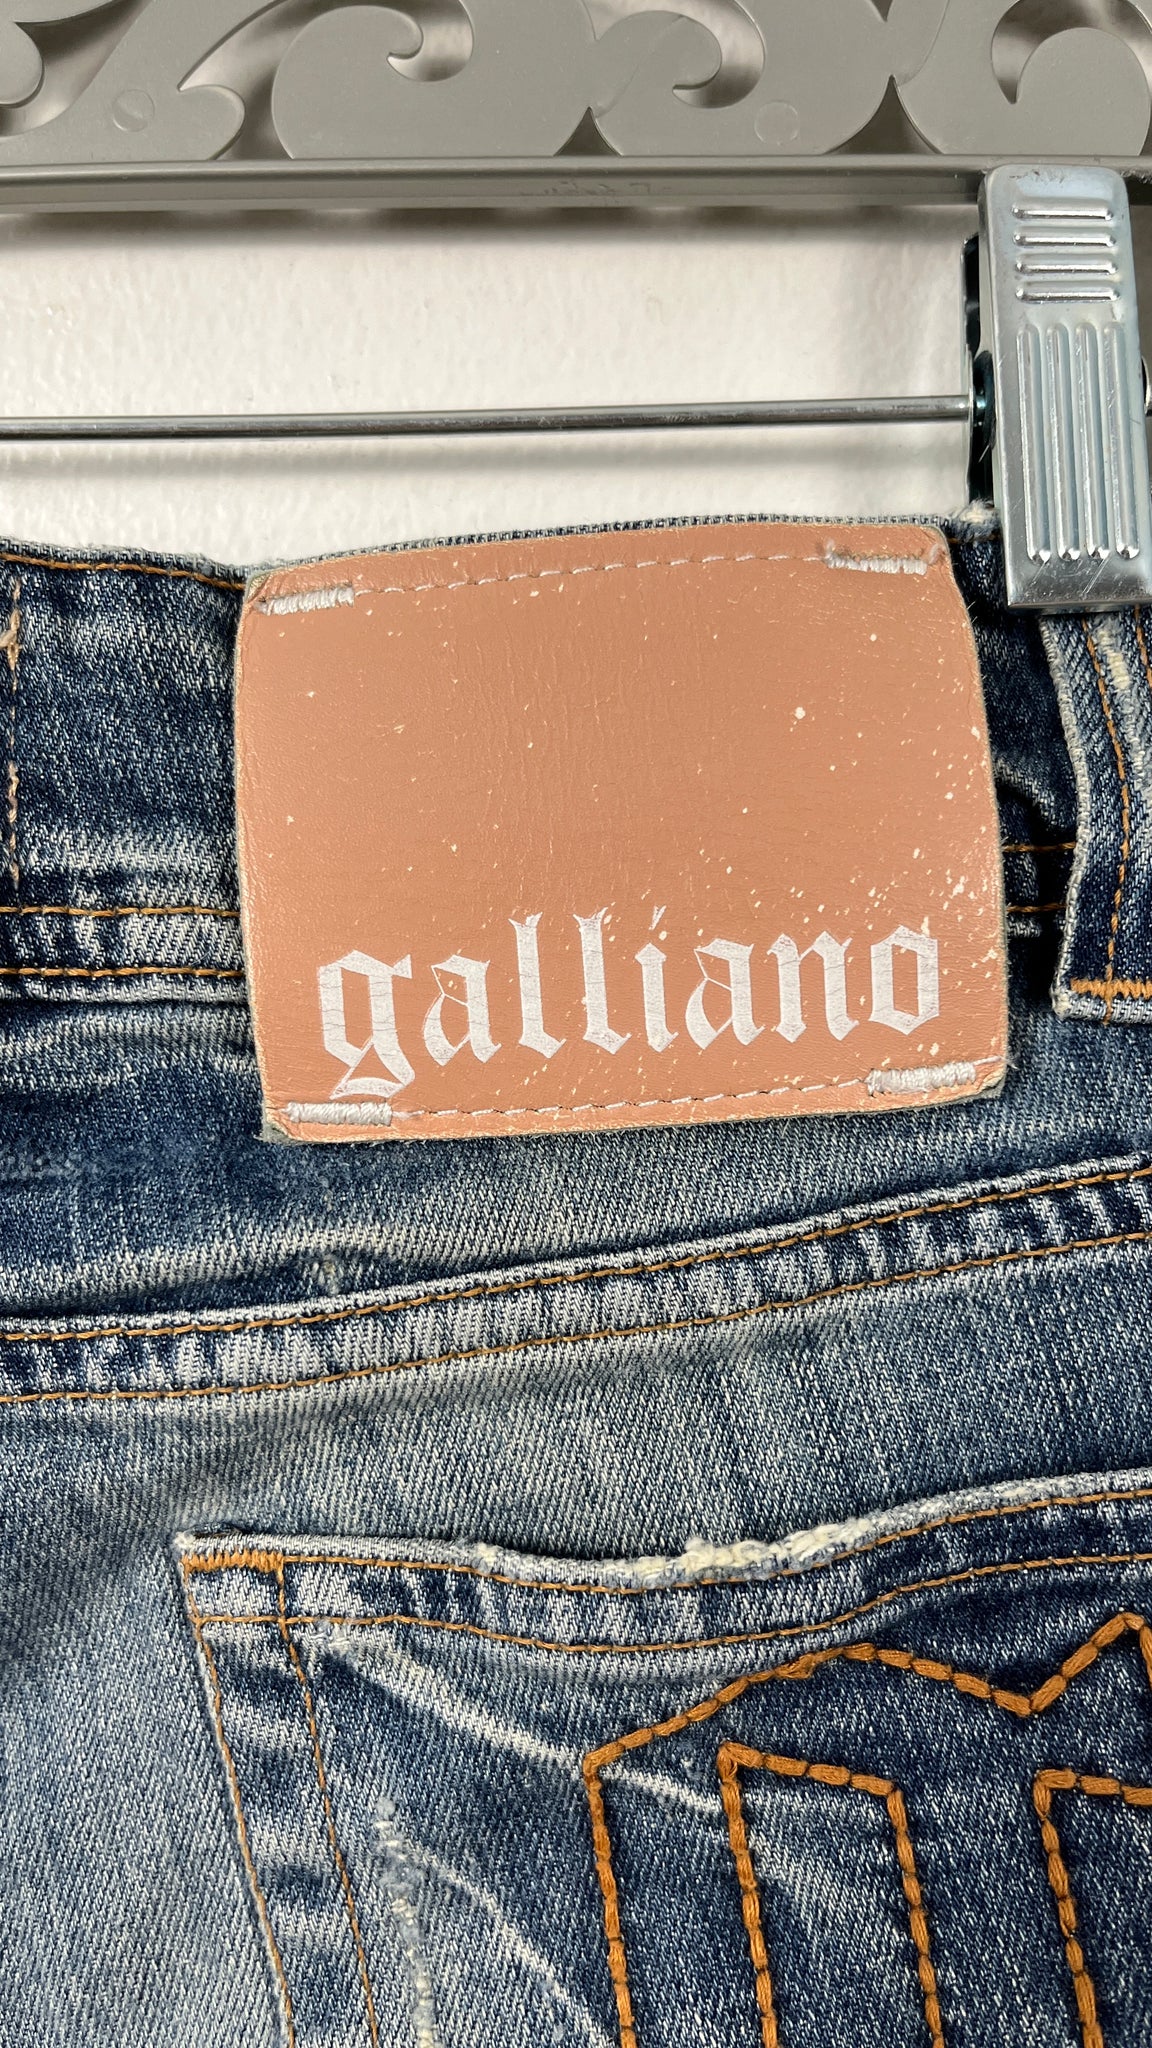 John Galliano Twisted Leg Skinny Jeans